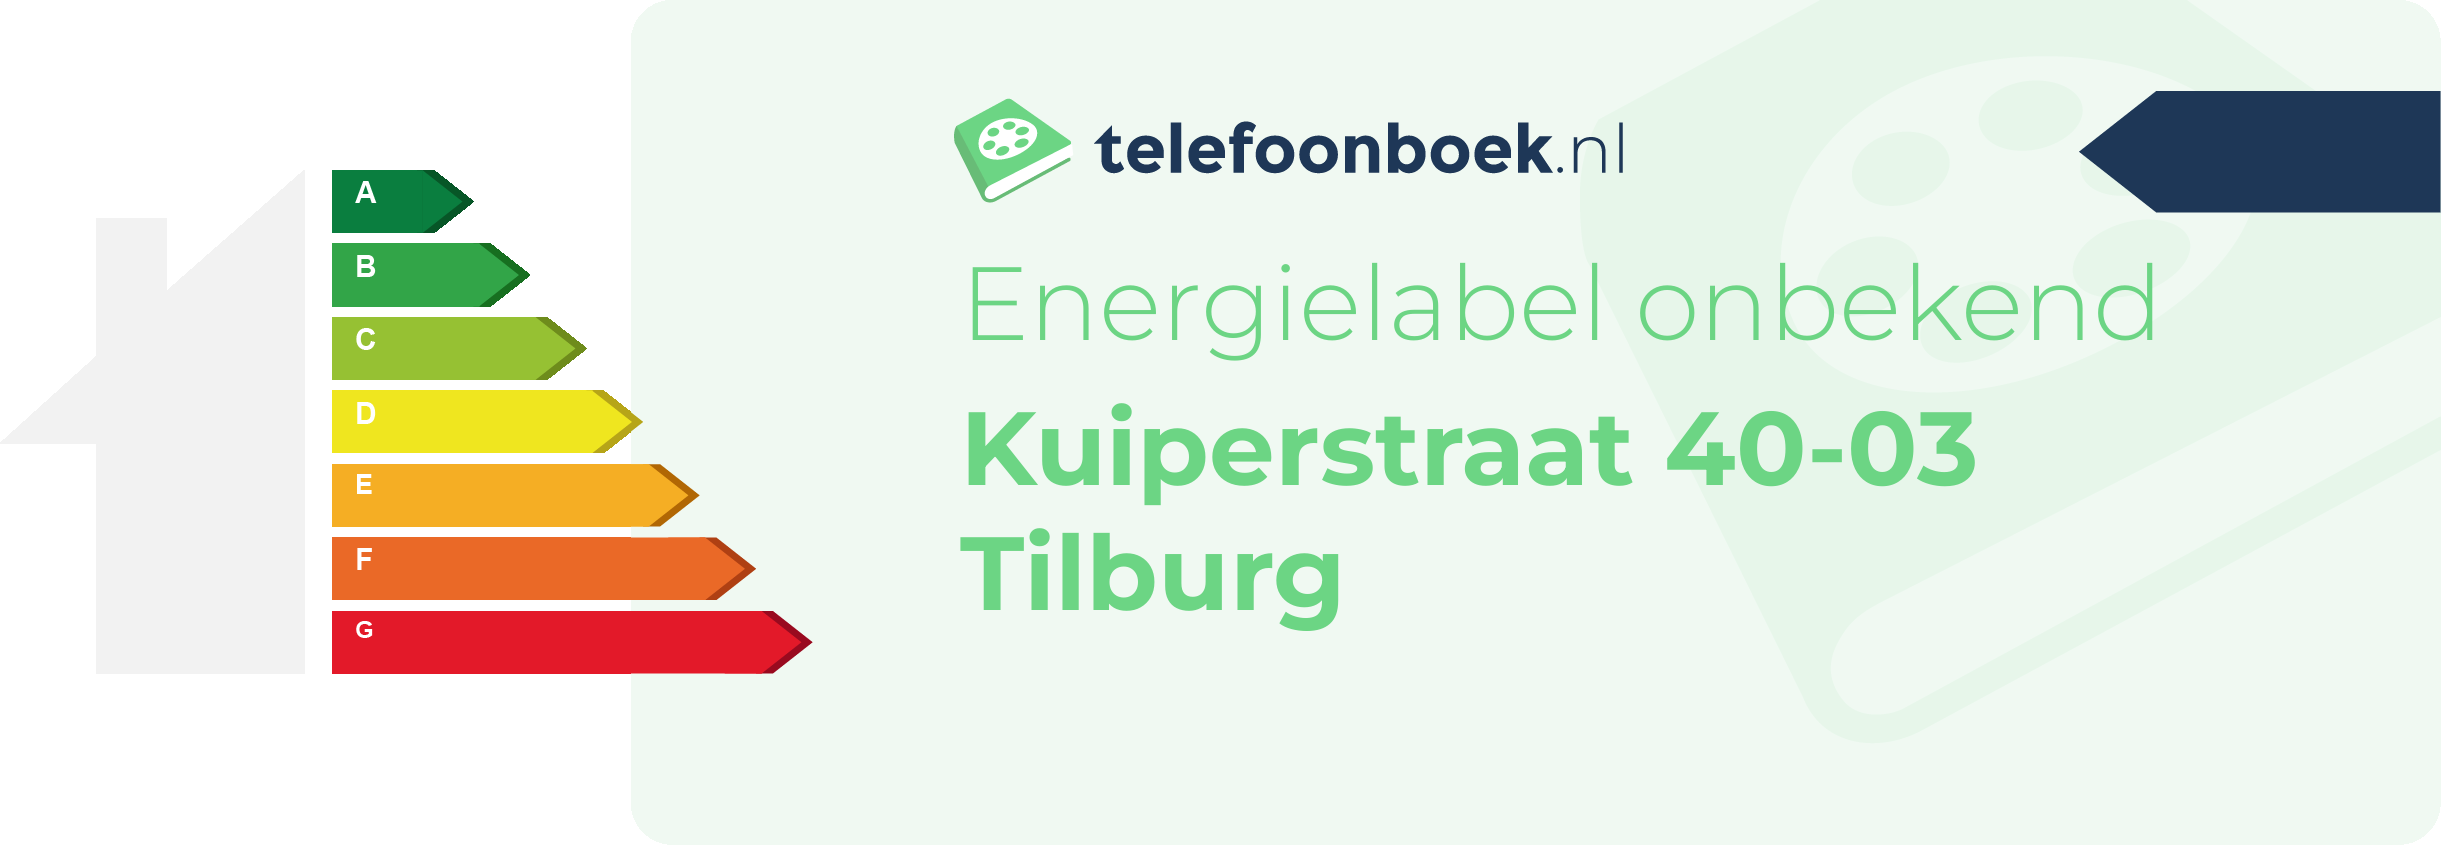 Energielabel Kuiperstraat 40-03 Tilburg